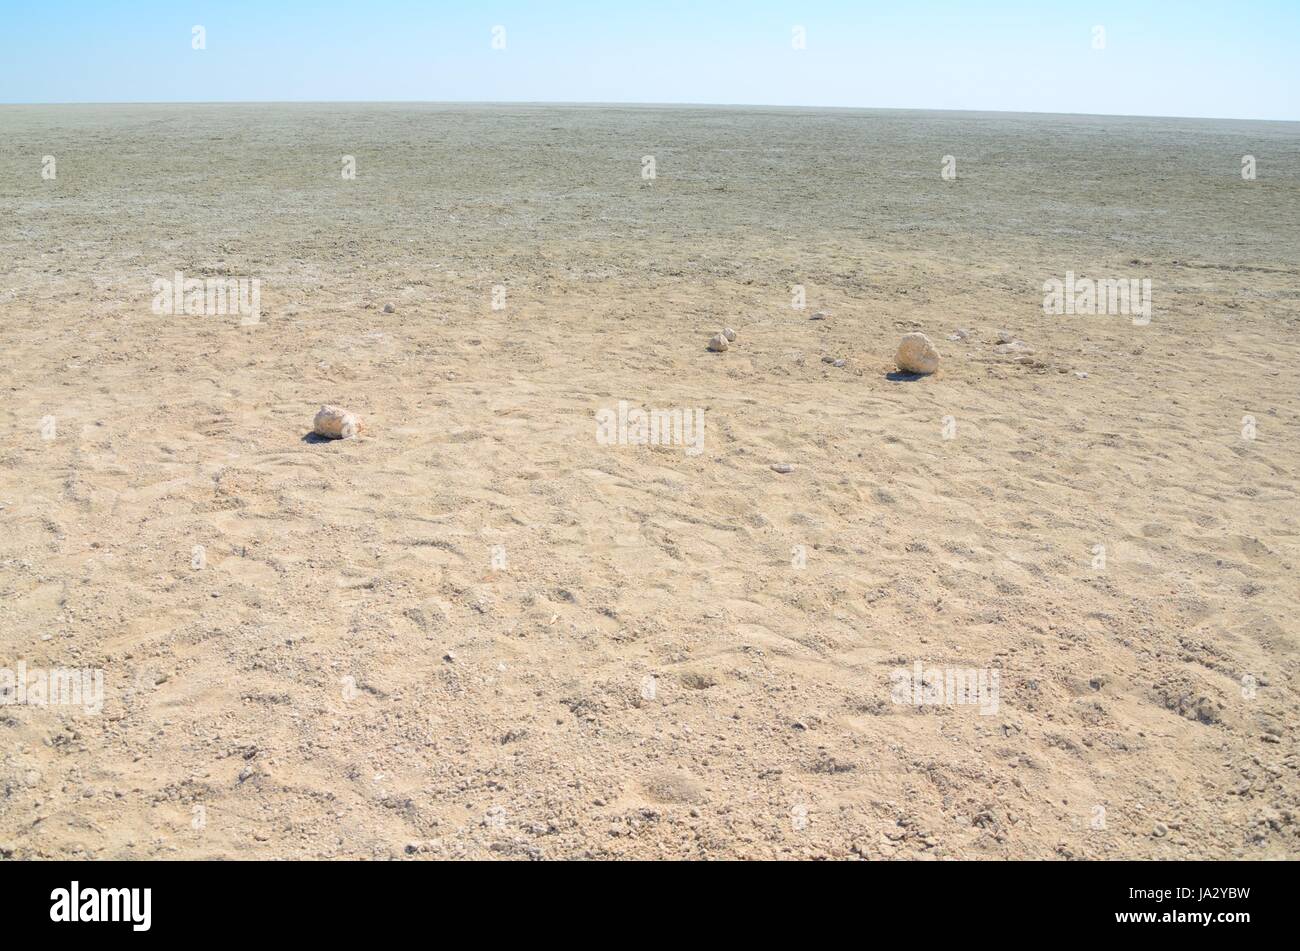 africa, namibia, dry, dried up, barren, travel, desert, wasteland, tourism, Stock Photo